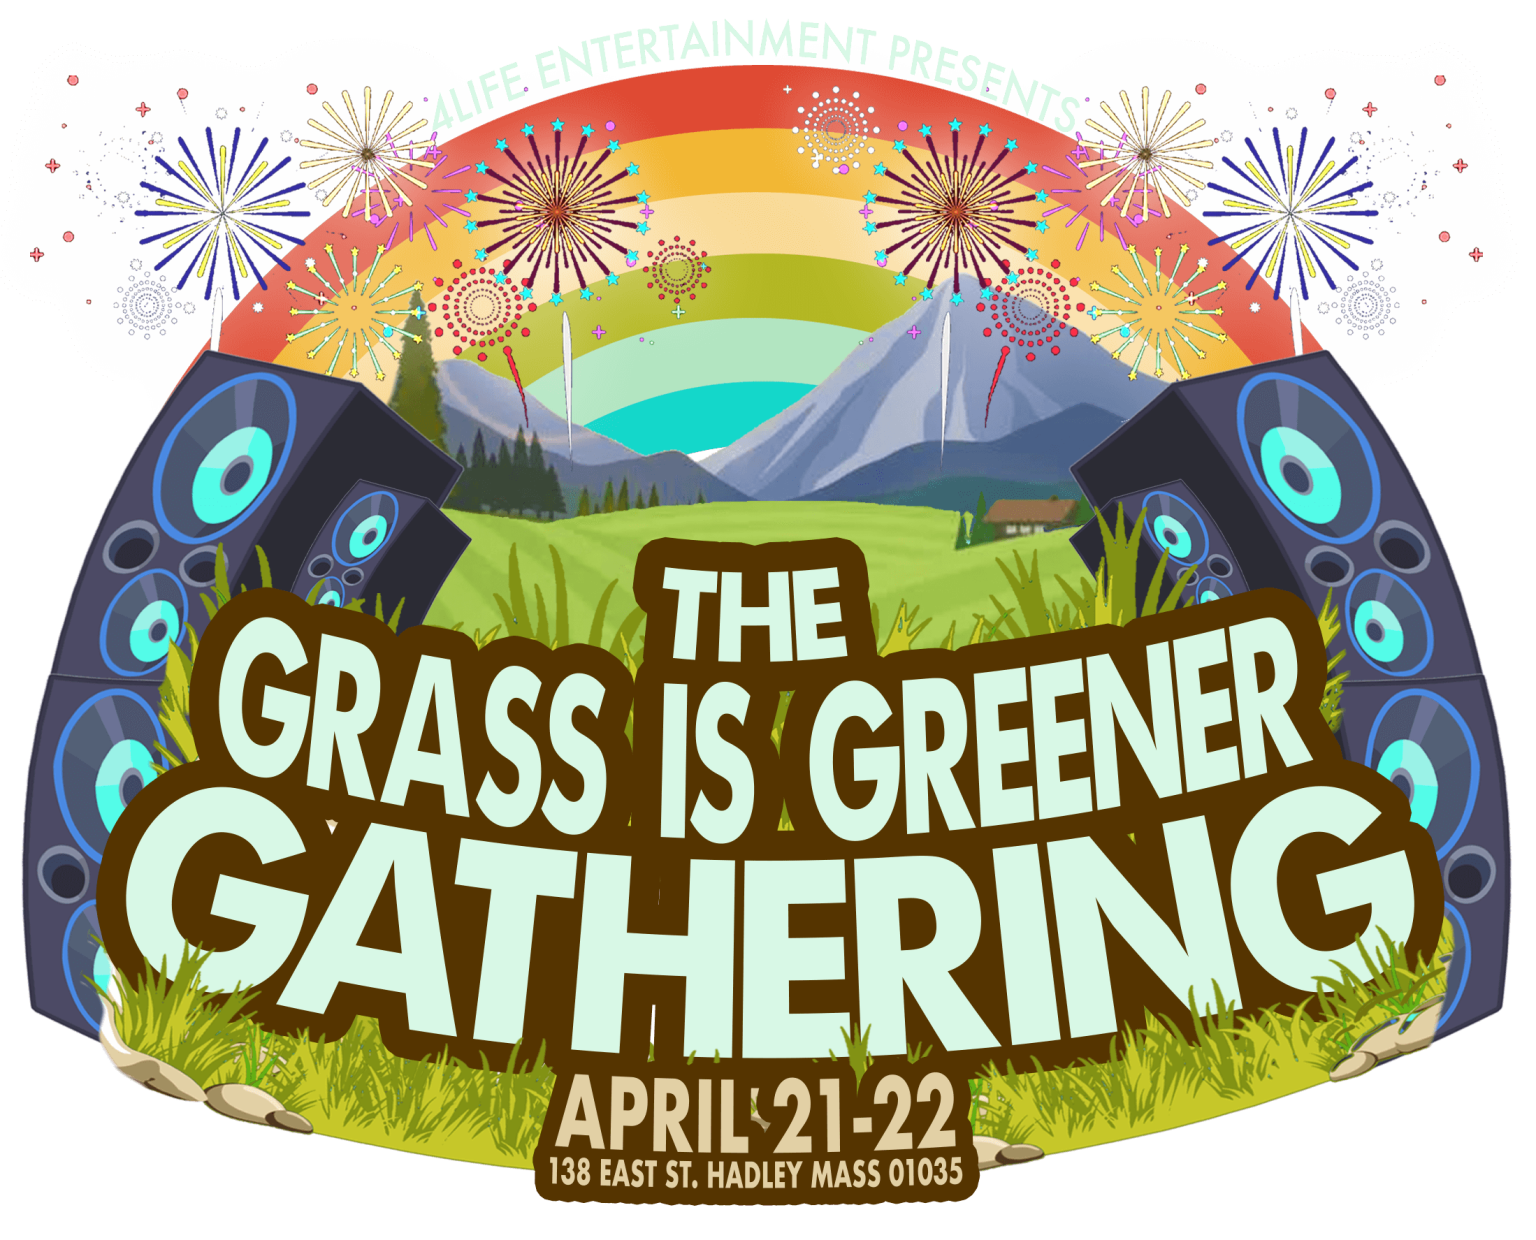 Grass is Greener Gathering